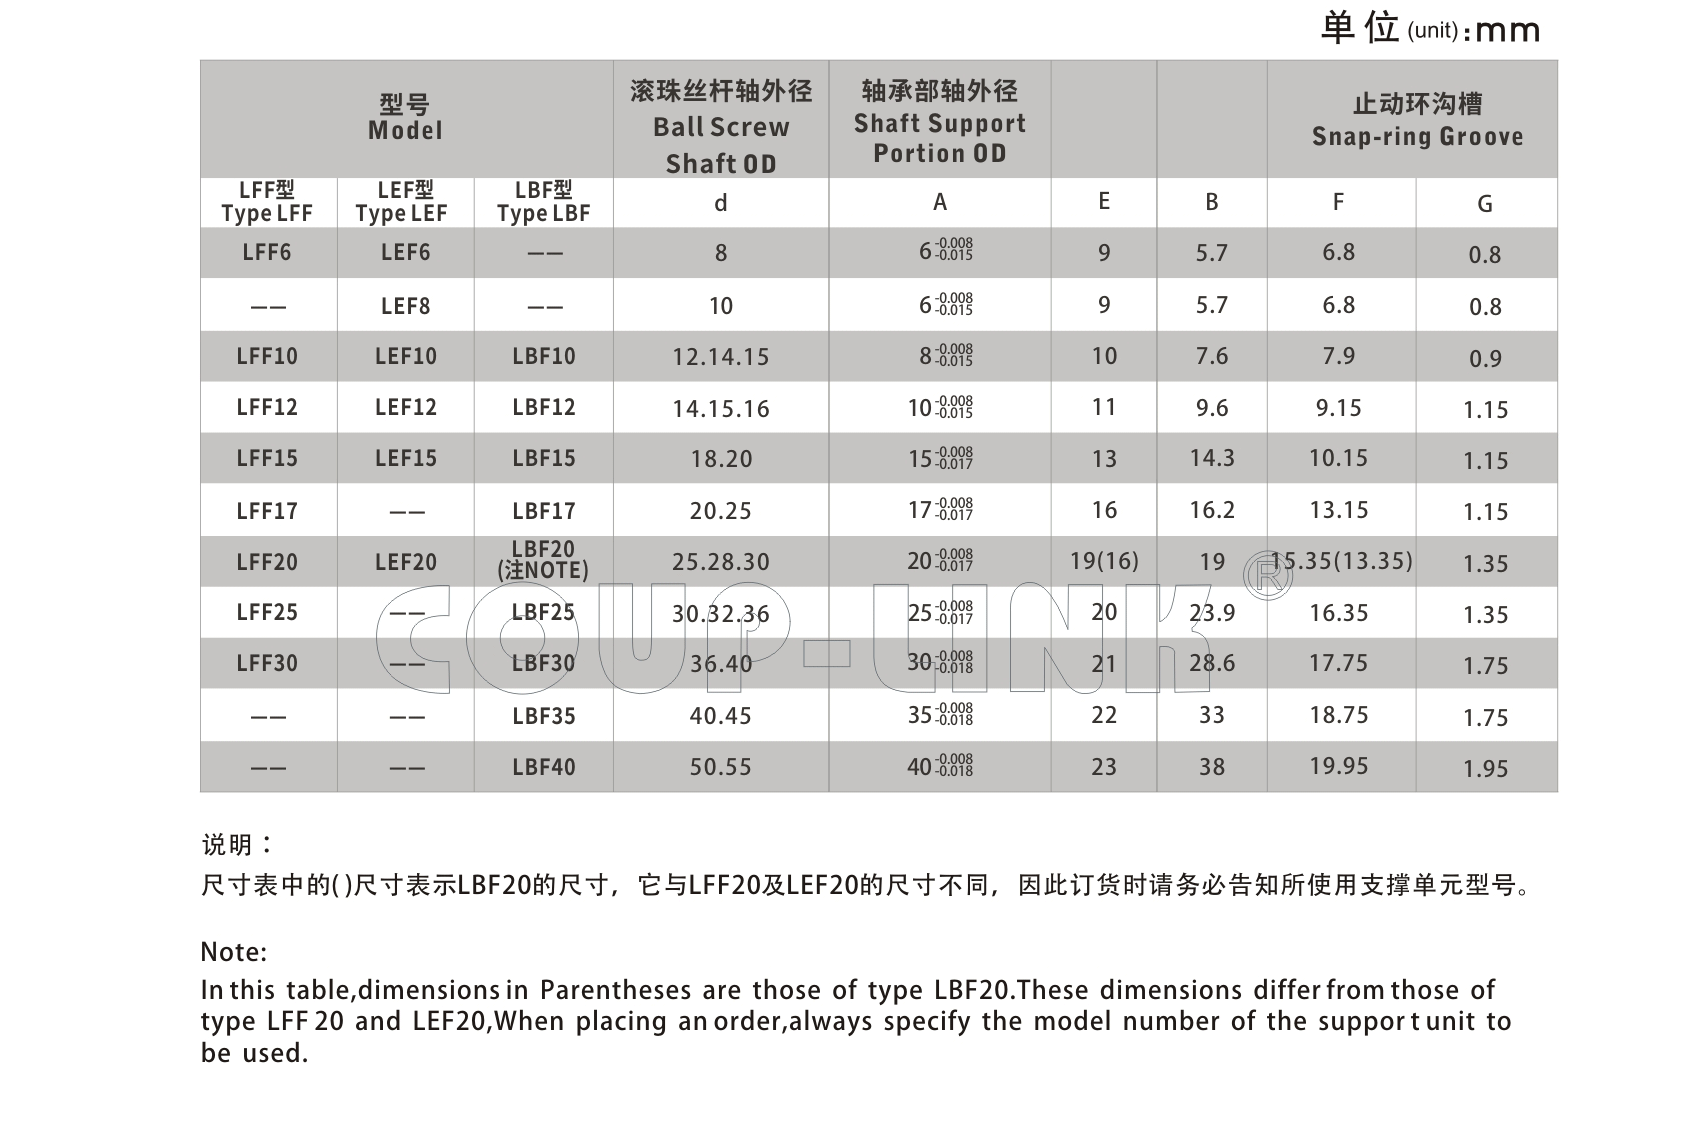 LEF 支撑侧_联轴器种类-广州菱科自动化设备有限公司